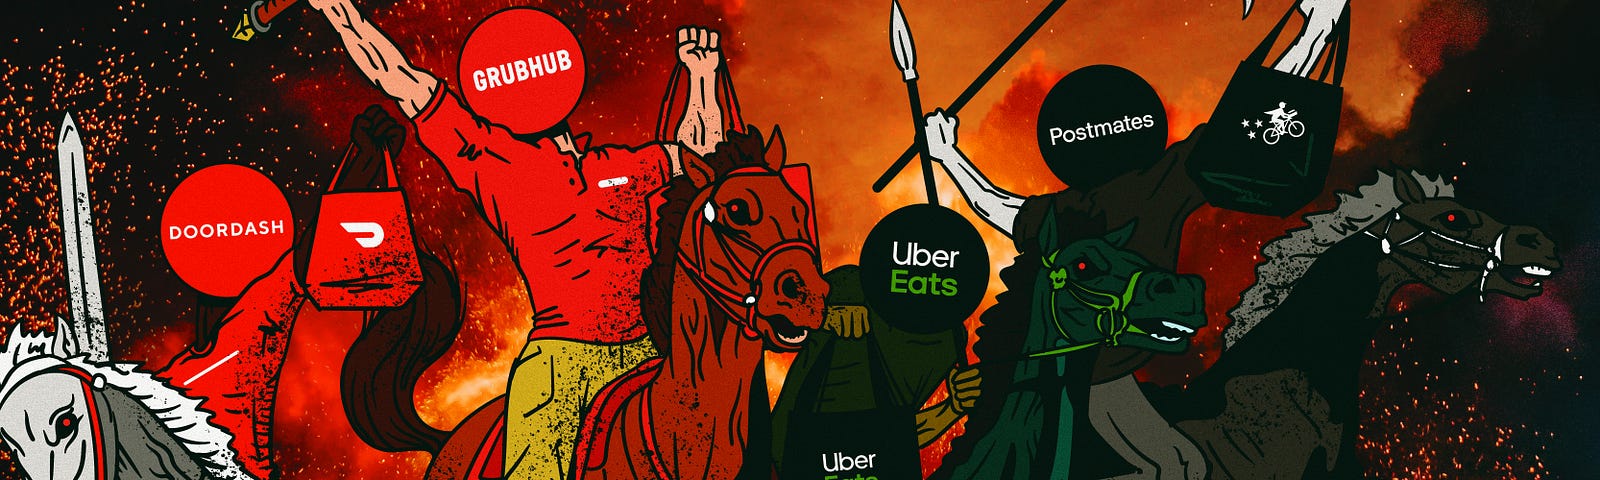 Doordash, Grubhub, Uber Eats, Postmates — the Four Horsemen of the forthcoming restaurant apocalypse?